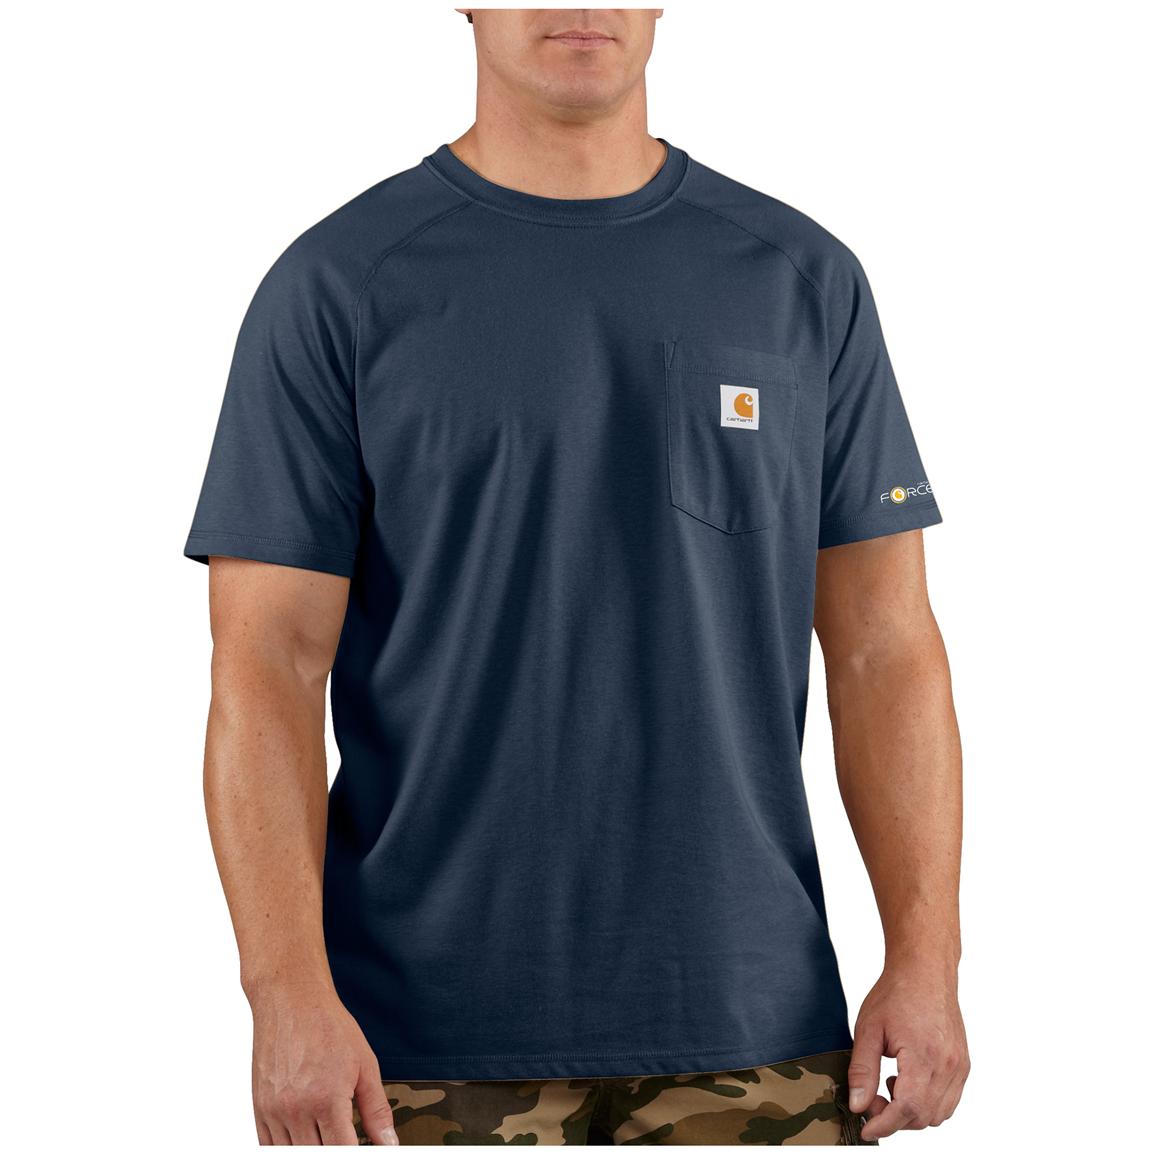 Carhartt Force Cotton Short-sleeved T-shirt - 590859, T-Shirts at ...